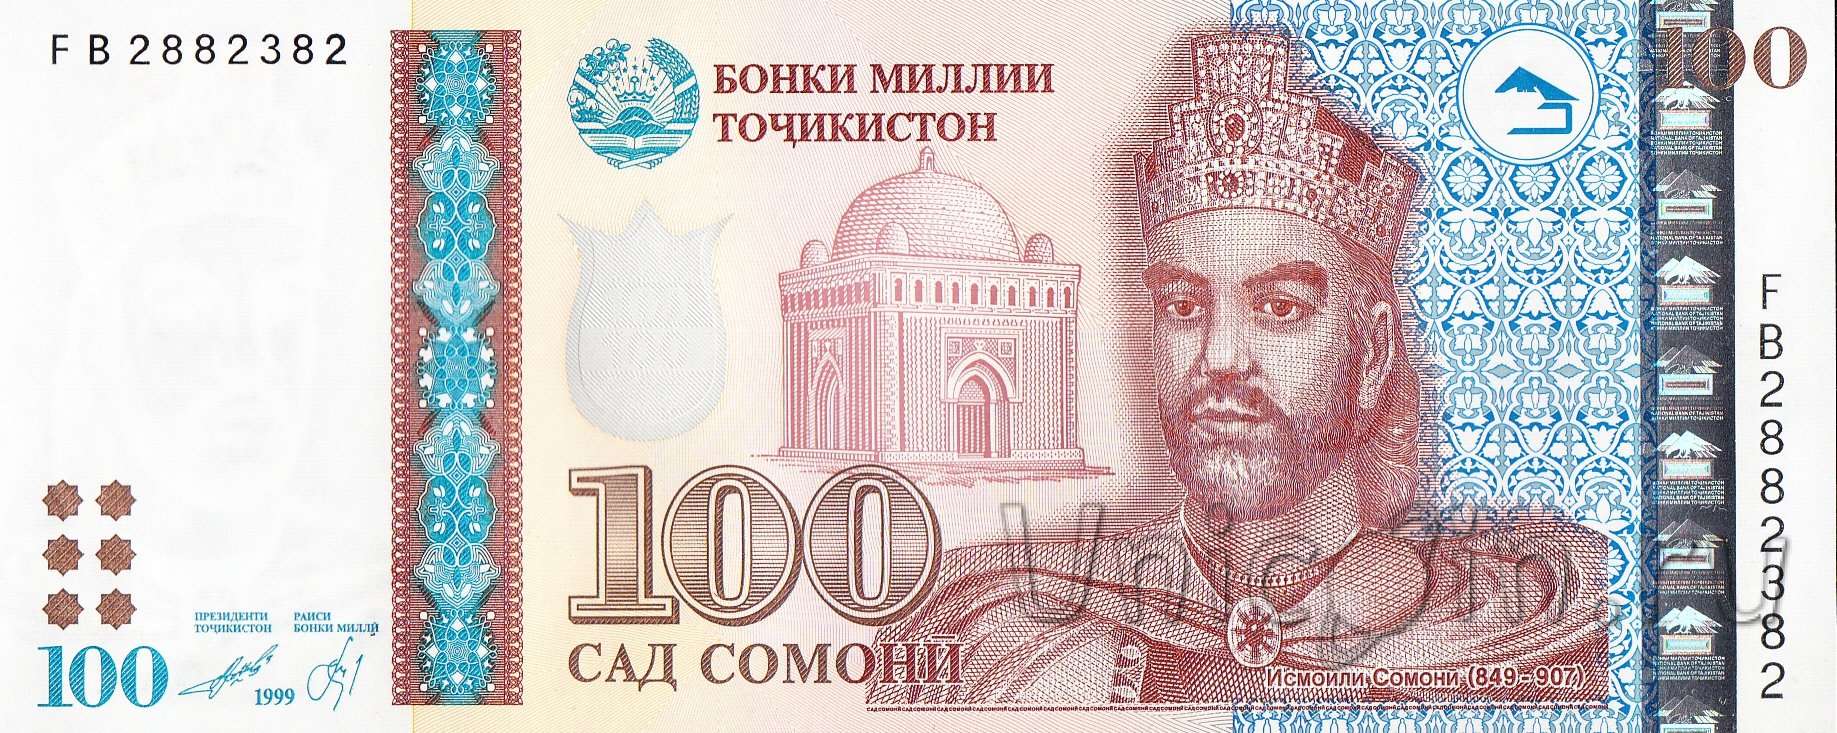 Национальная валюта таджикистана. 100 Сомони.